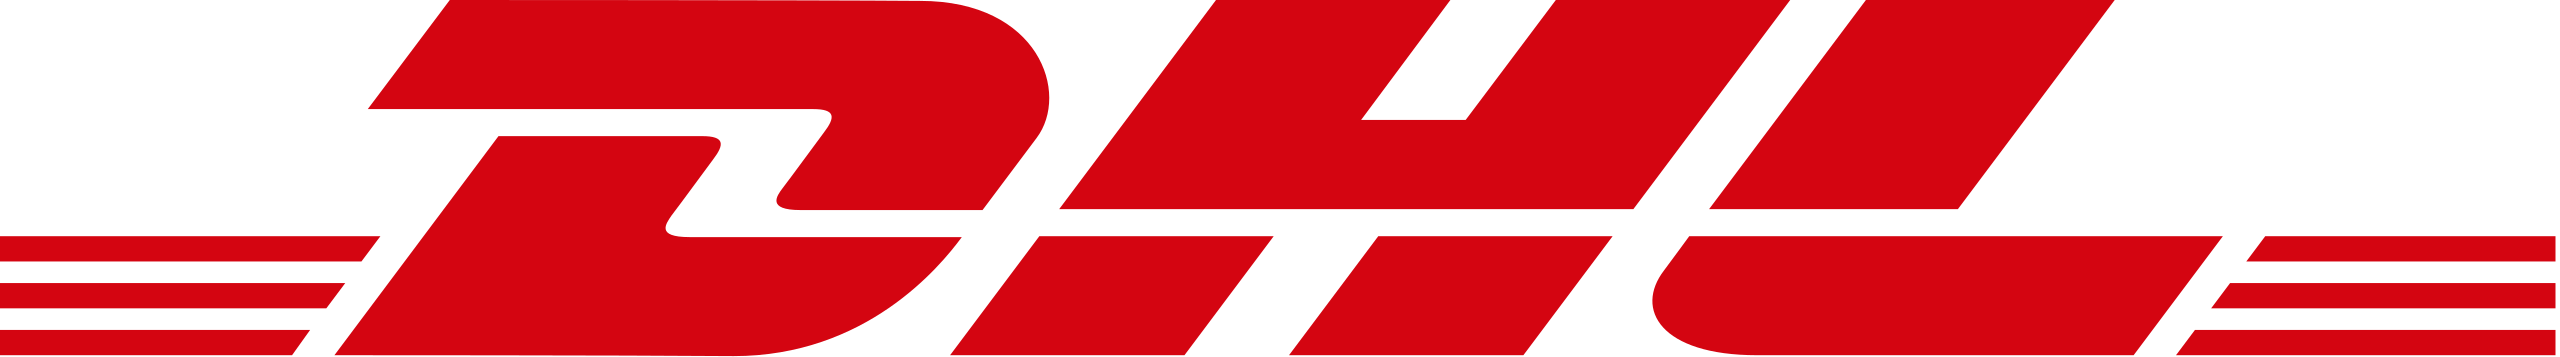 2560px-Dhl-logo.svg